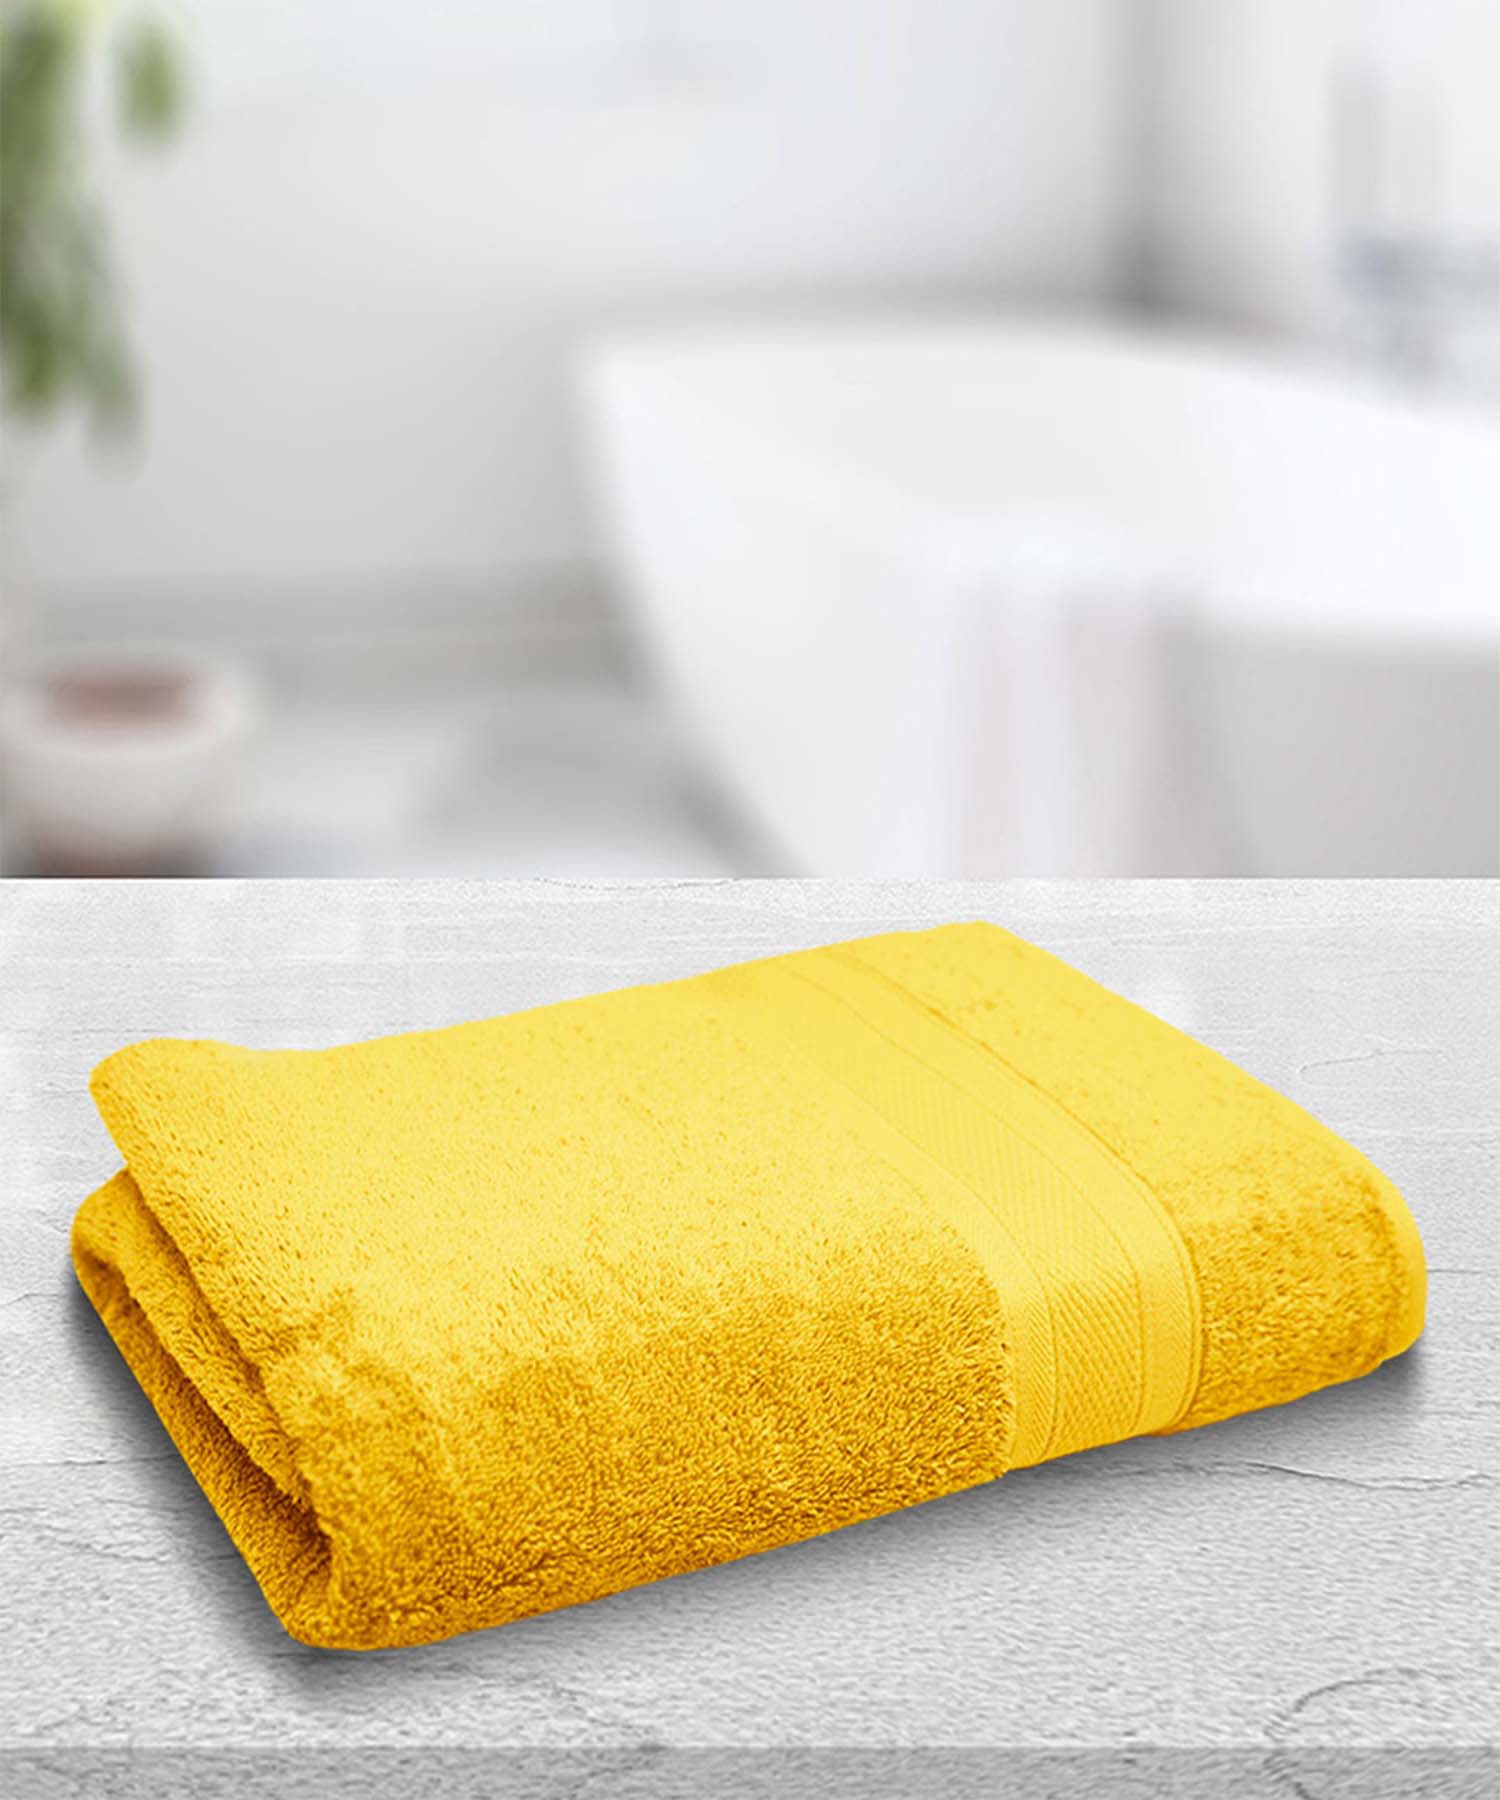 1 Bath Towel ₹599/-